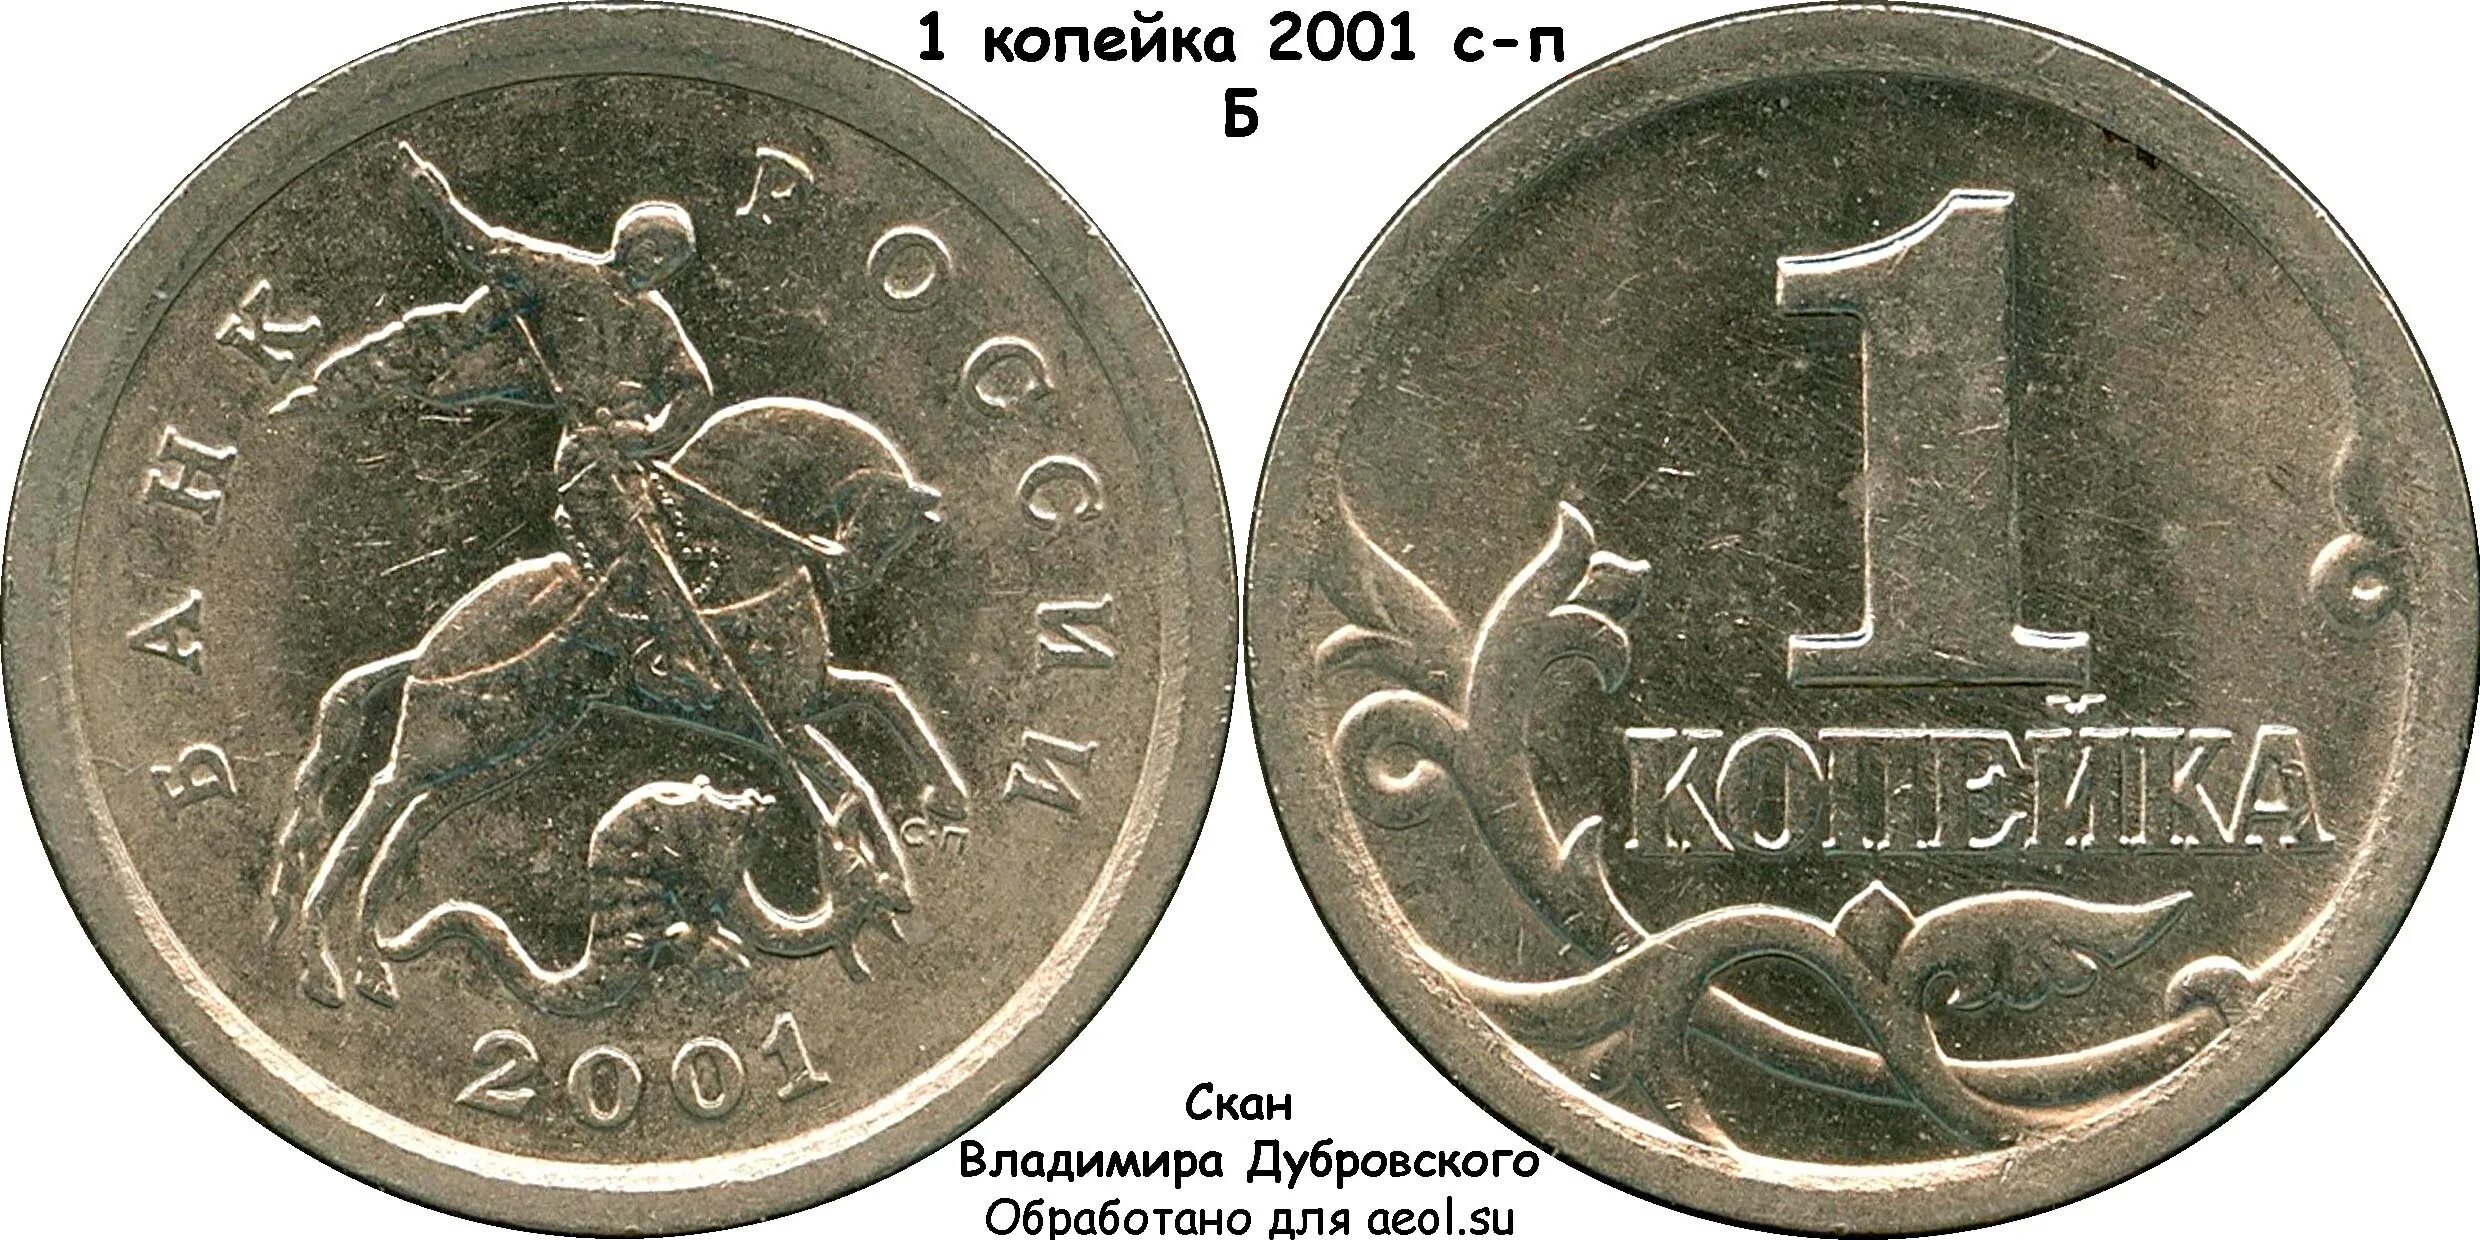 Монеты 2001 года цена стоимость монеты. 50 Копеек 10 копеек 1 копейка. Монета Аверс 1 копейка. 1 5 10 50 Копеек. Монеты 1 копейка Аверс и реверс.